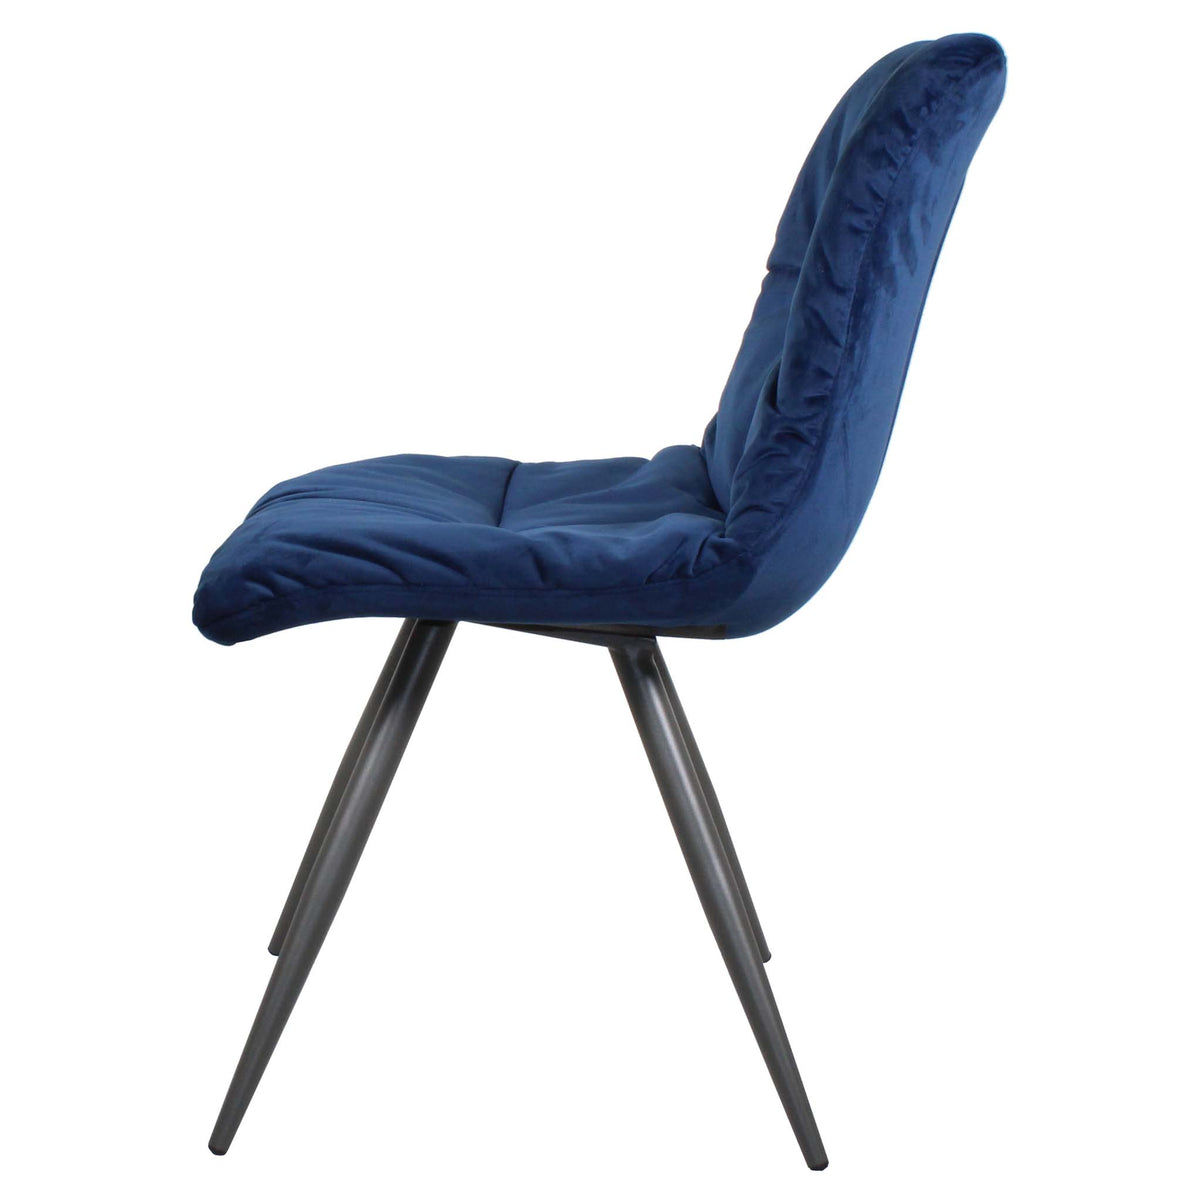 6 Addison Blue Chairs